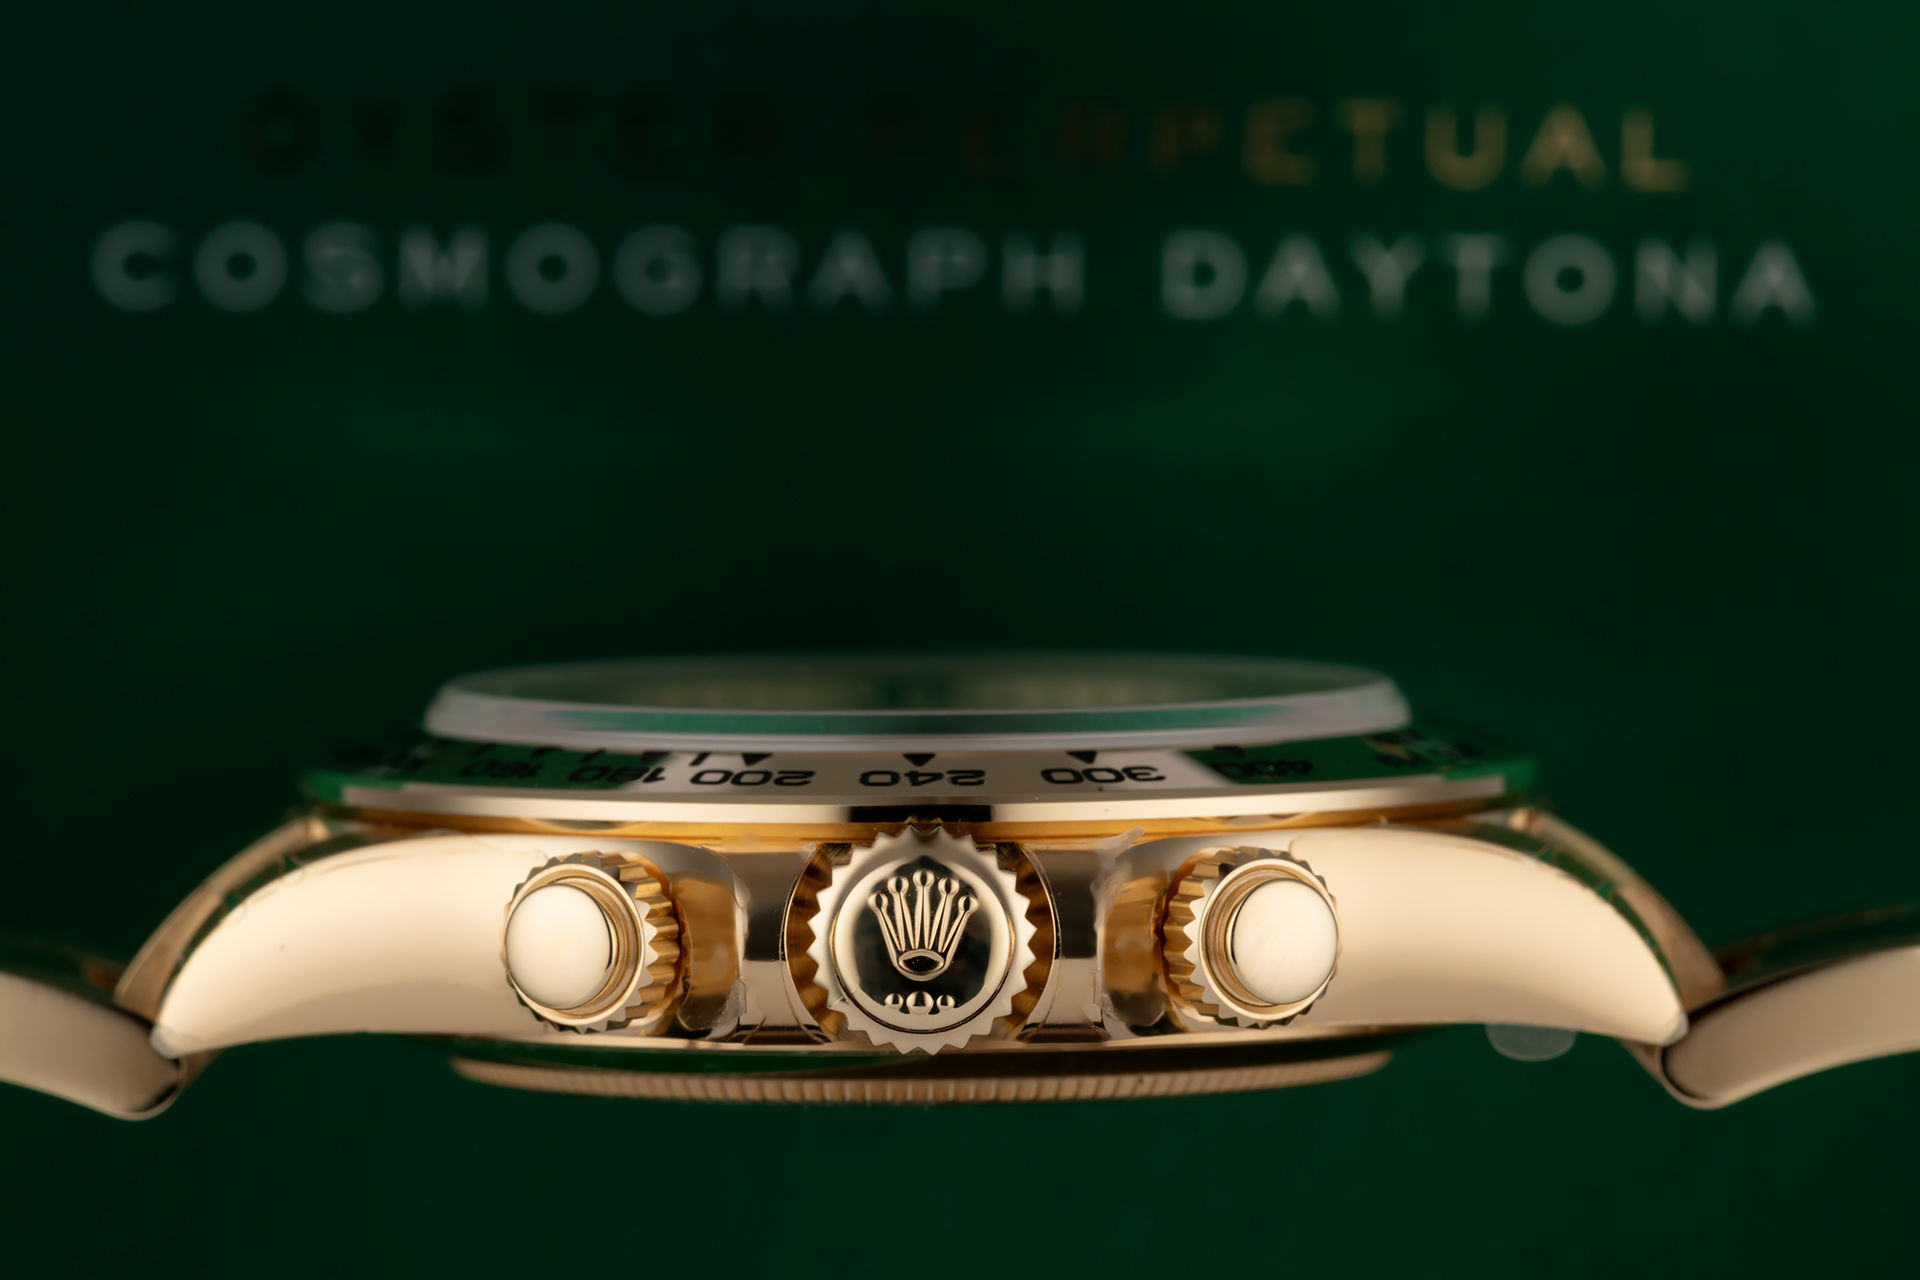 ref 116508 | 'Rare Green Dial' | Rolex Cosmograph Daytona